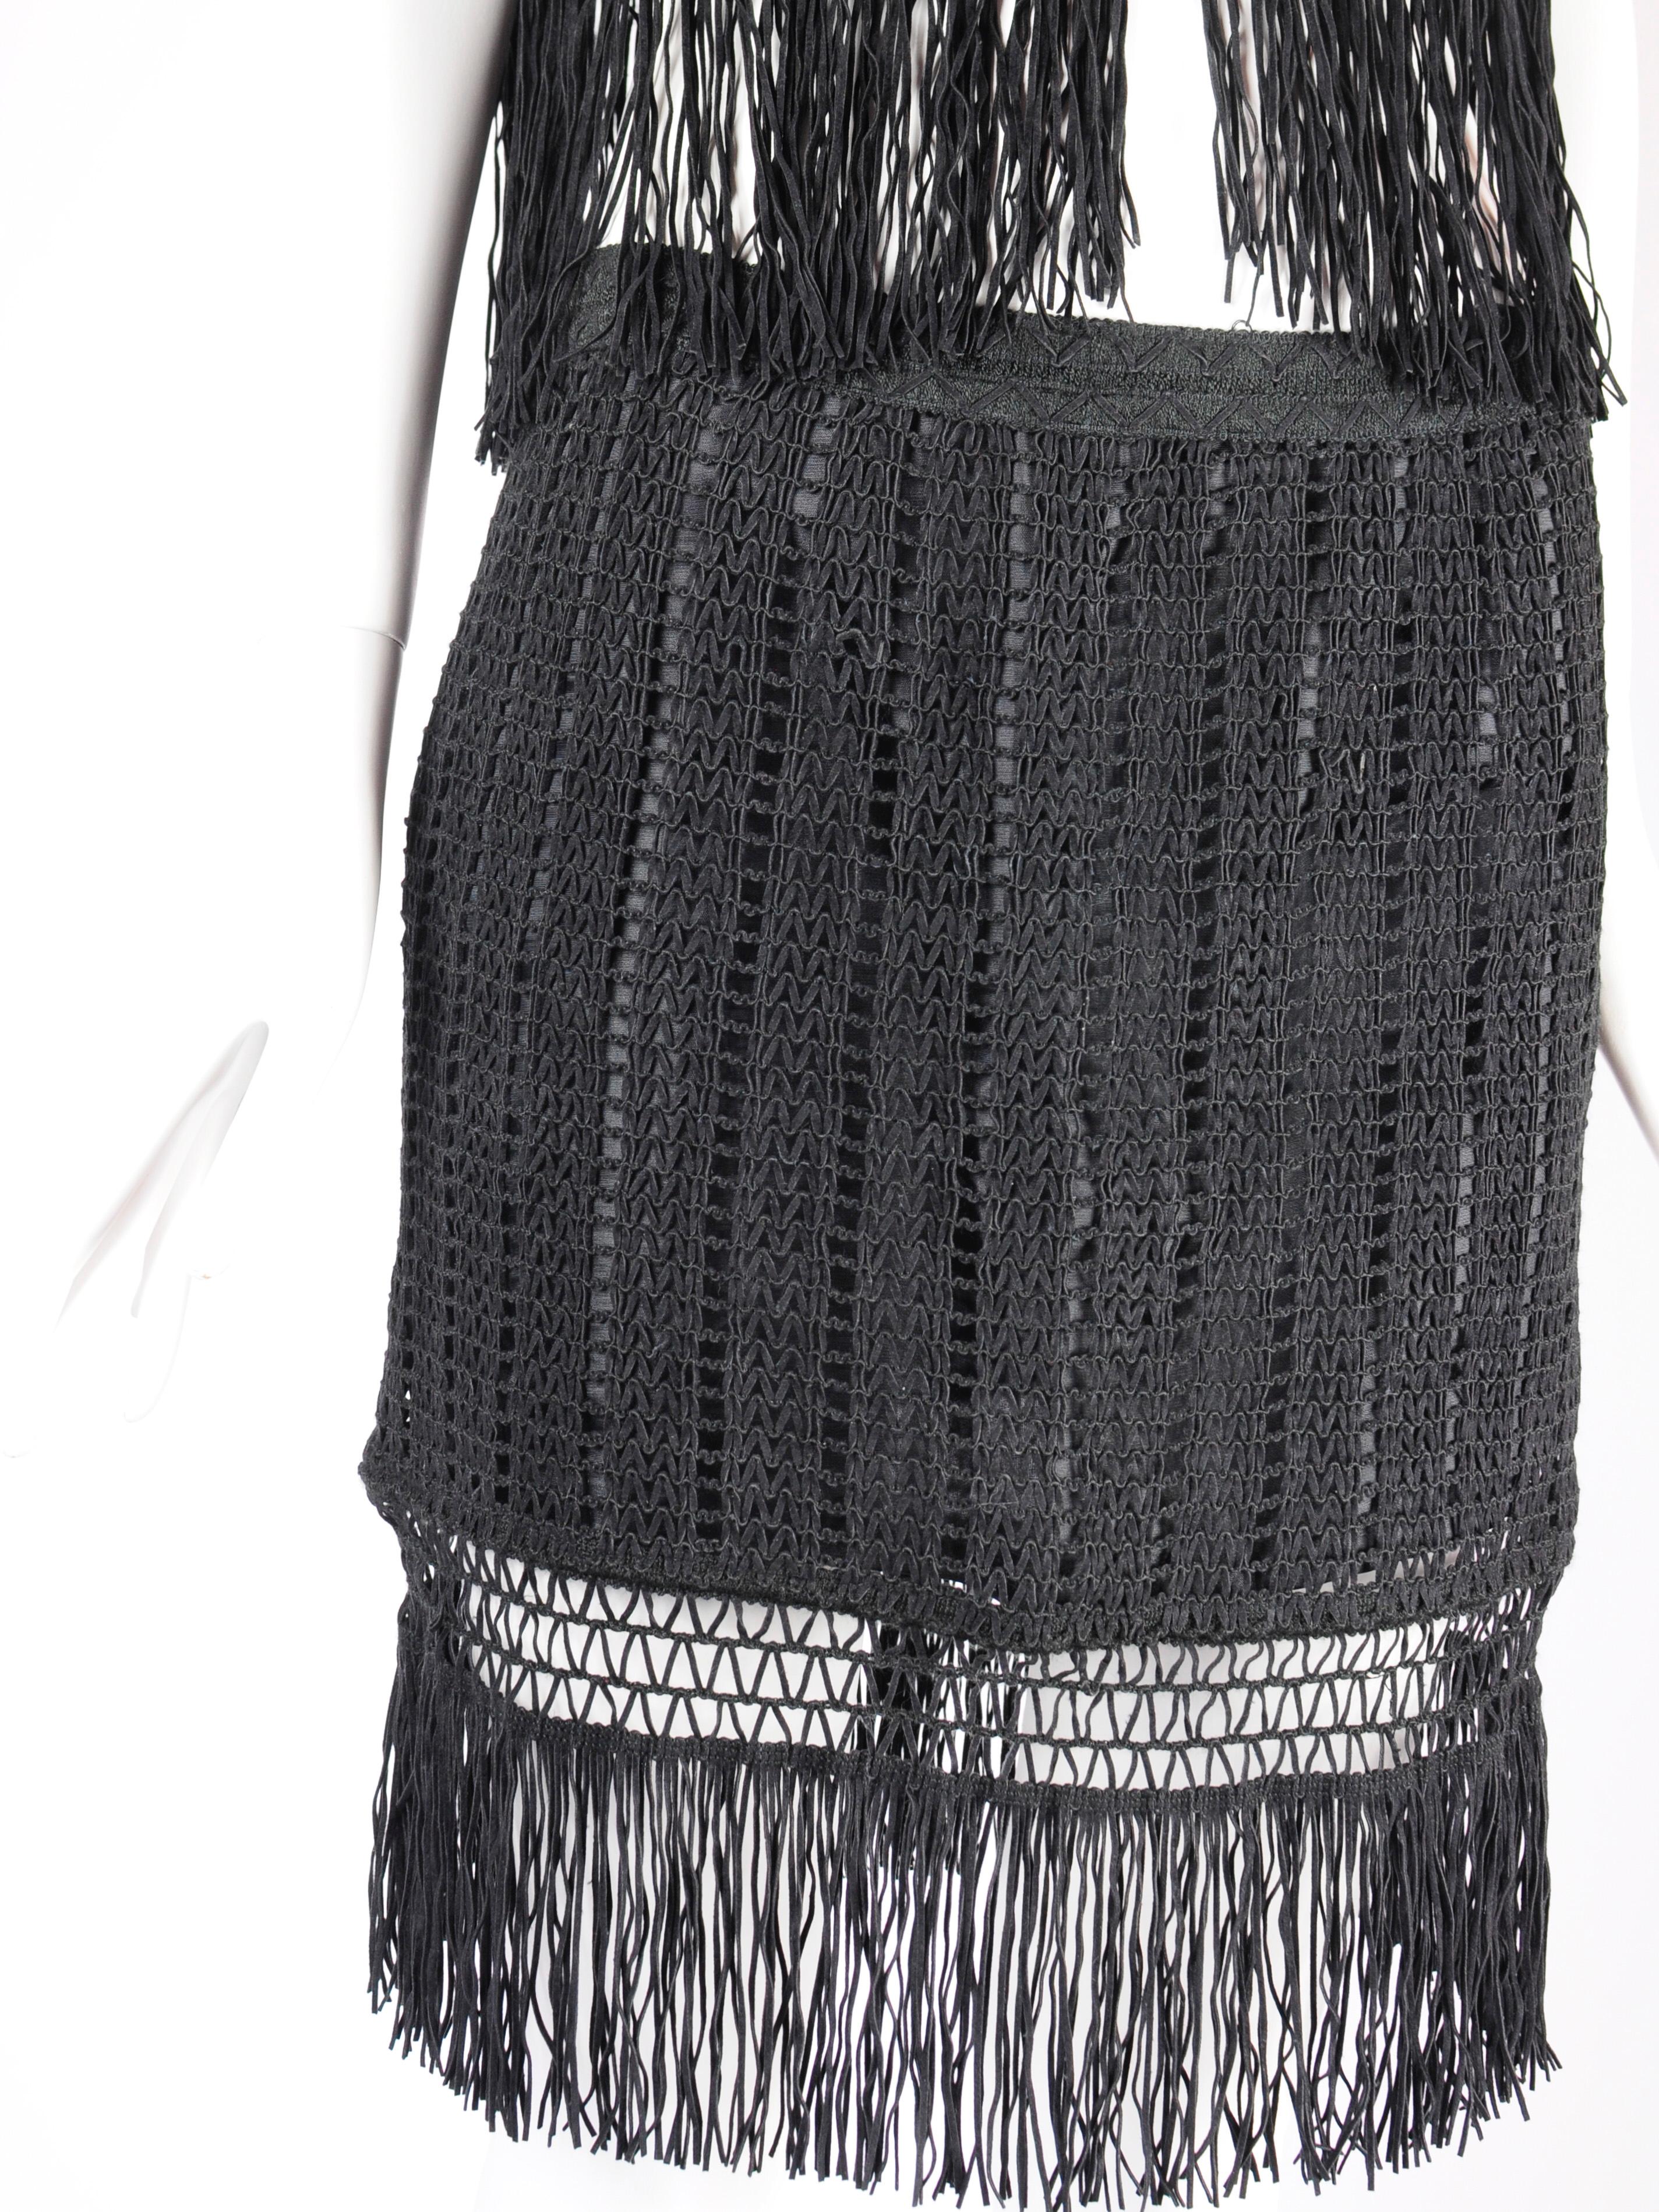 Marina Sitbon for Kamosho Paris 2-piece Fringe Crop Top and Mini Skirt Set 1990s For Sale 1